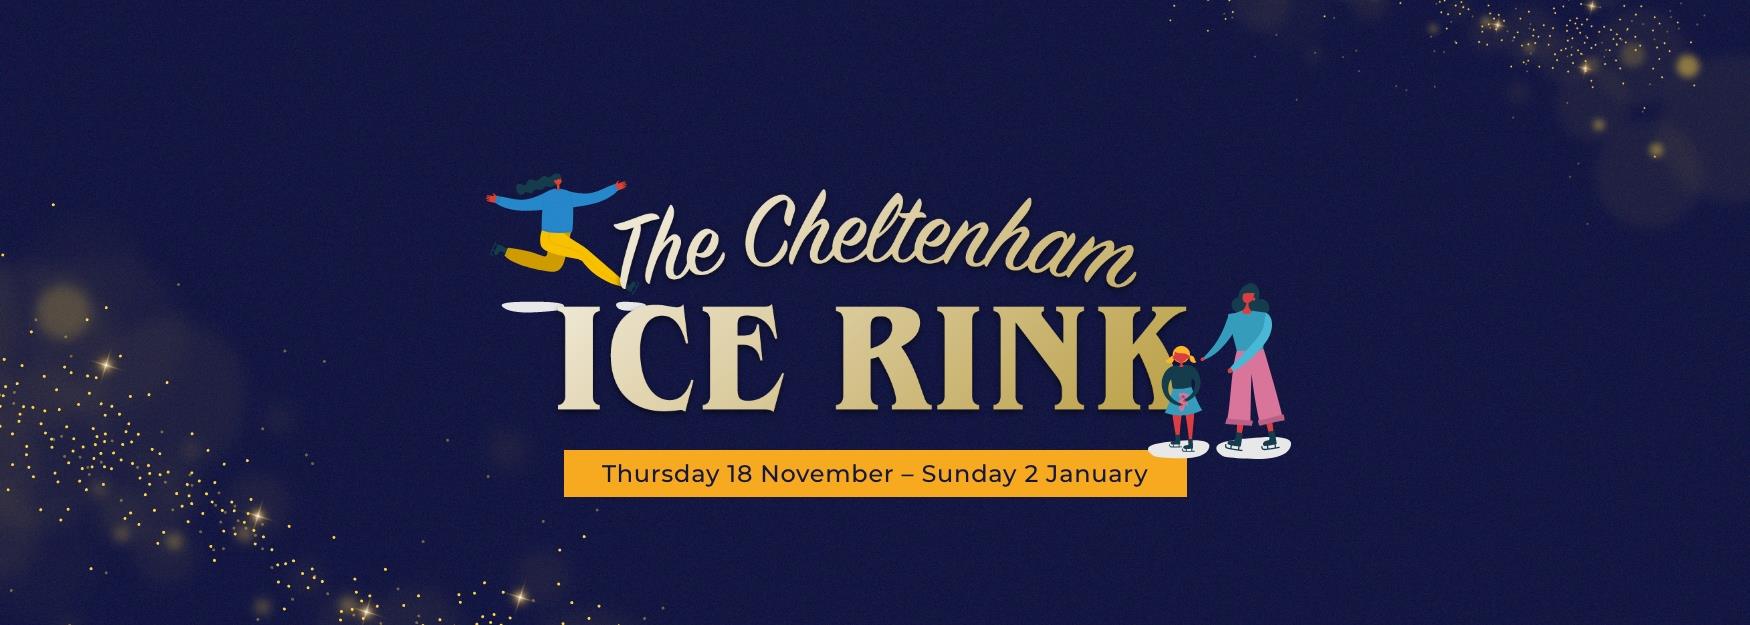 Ice skating in Cheltenham, Gloucestershire 2021